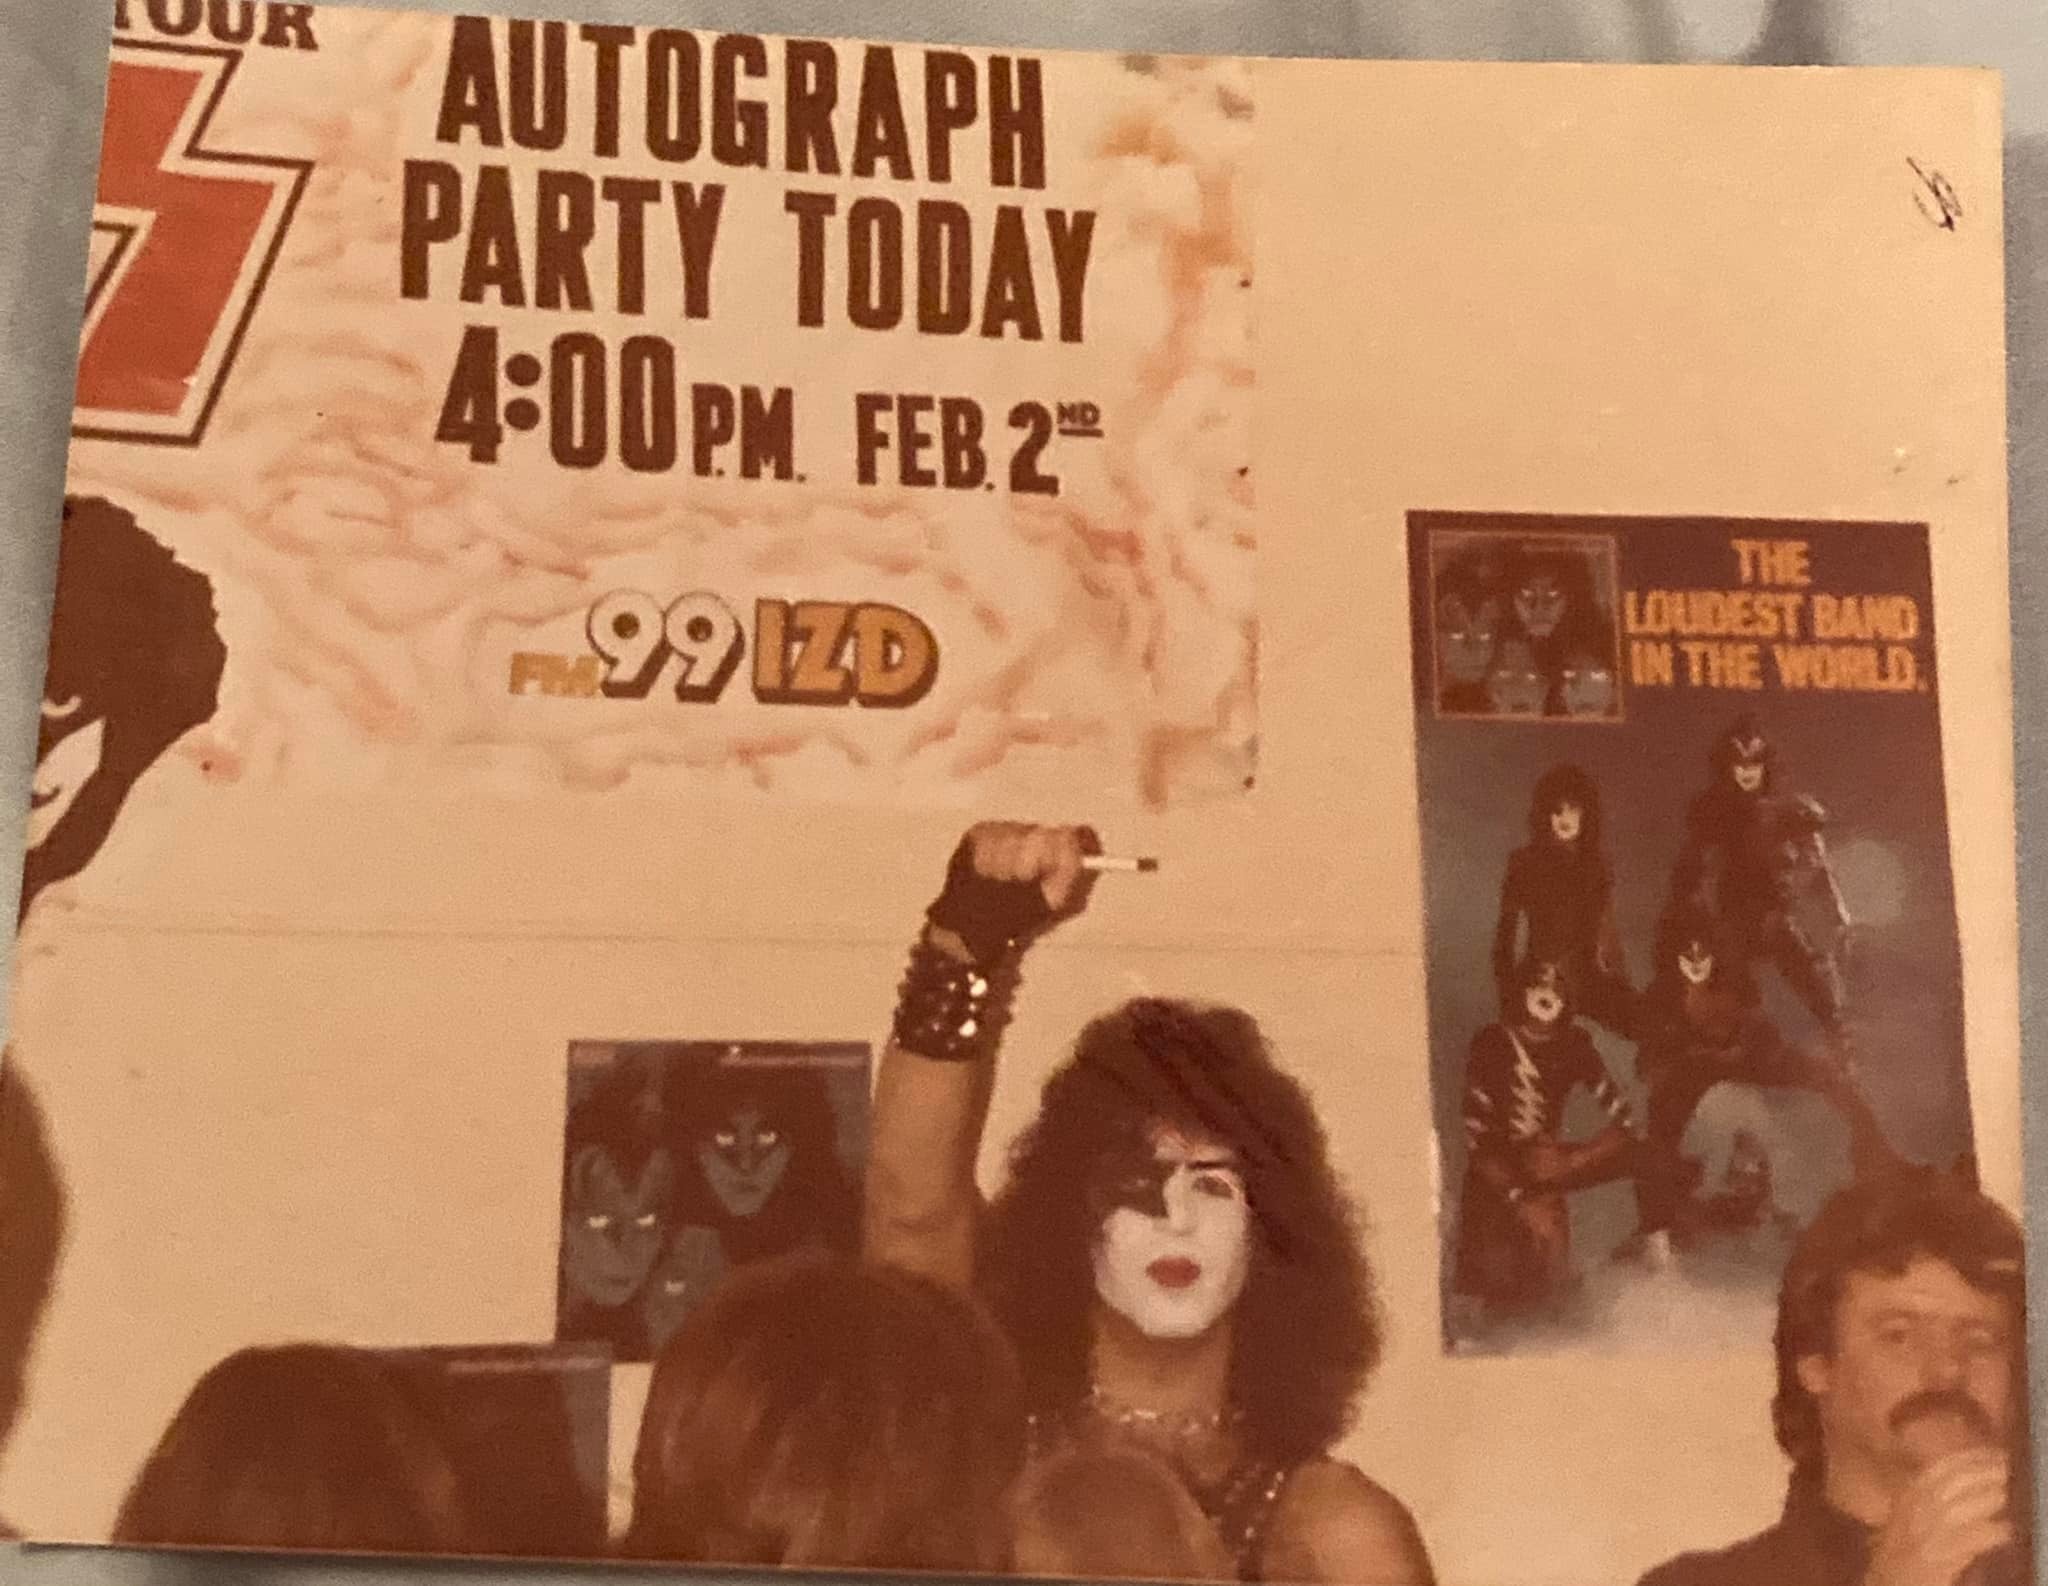 Paul ~Spec's Music, West Palm Beach Mall...February 2, 1983 (Album signing)